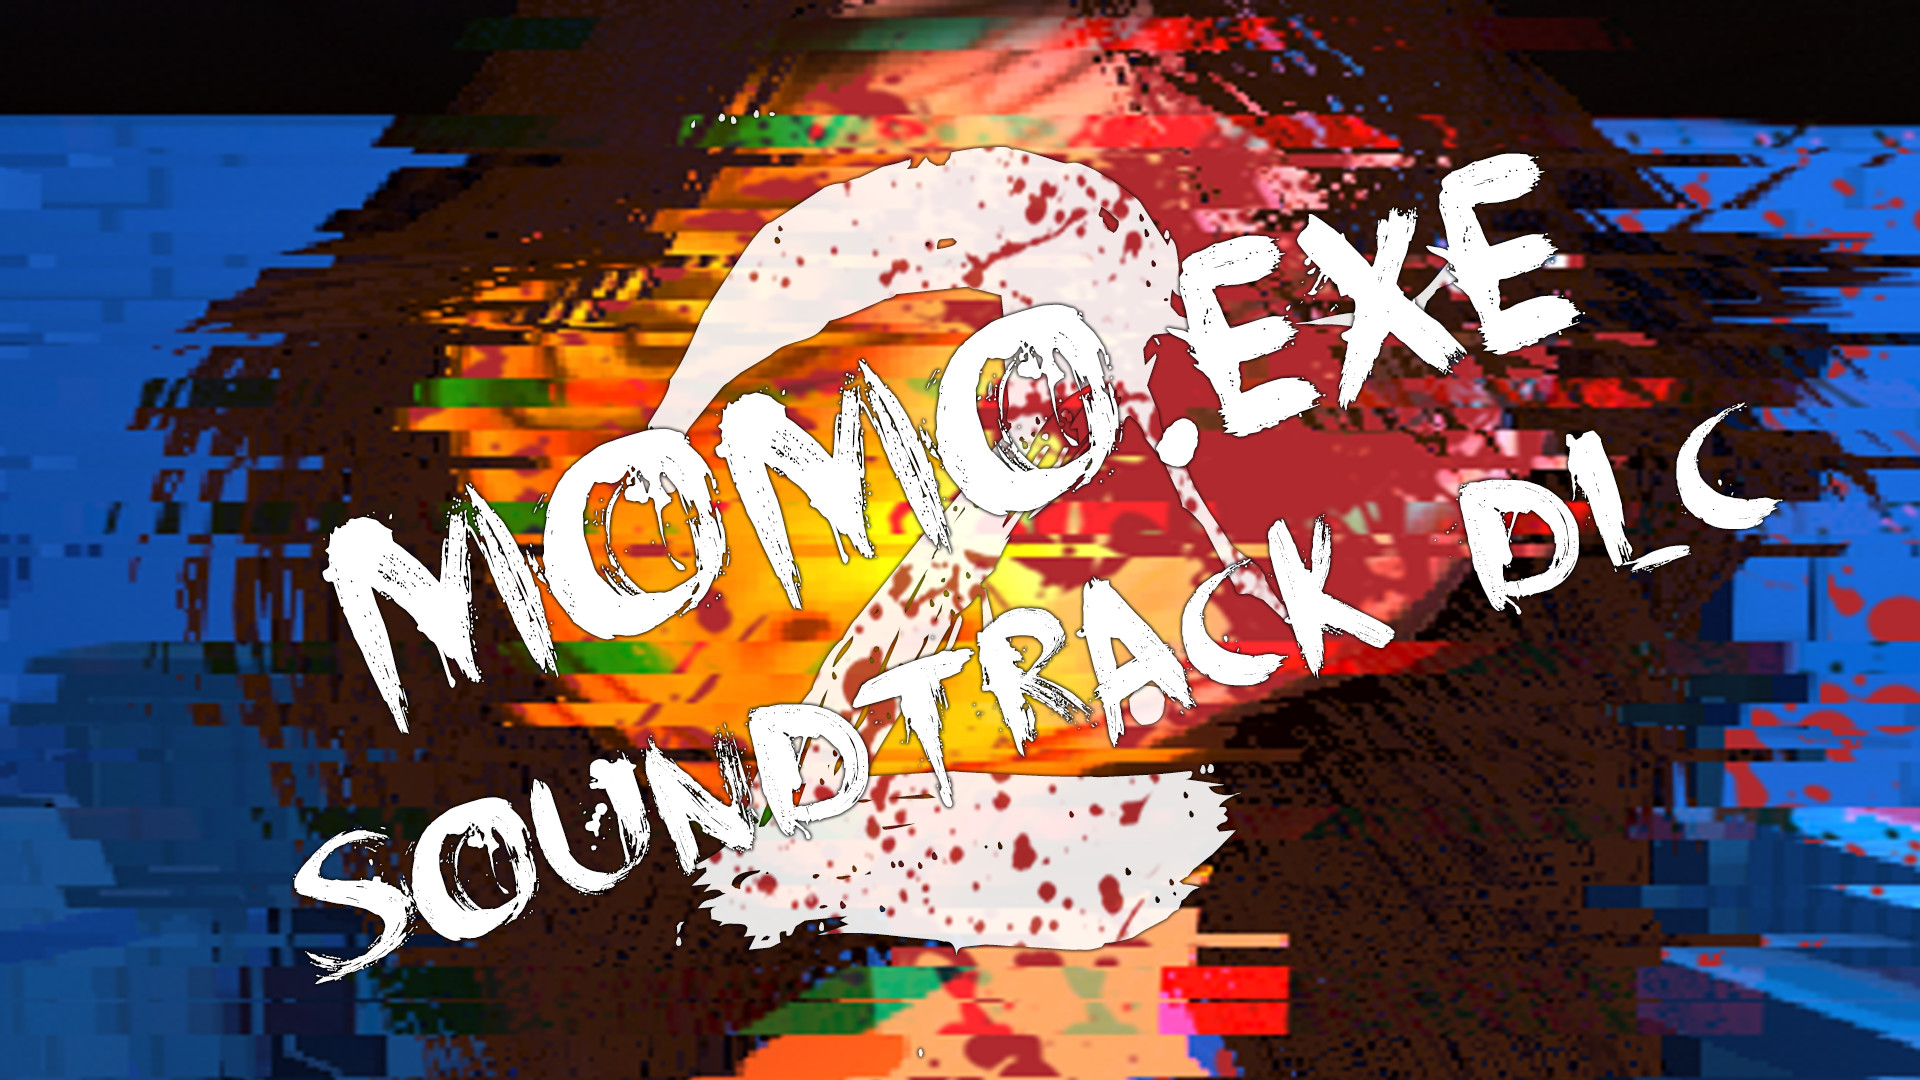 MOMO.EXE 2 - Official Soundtrack DLC Featured Screenshot #1